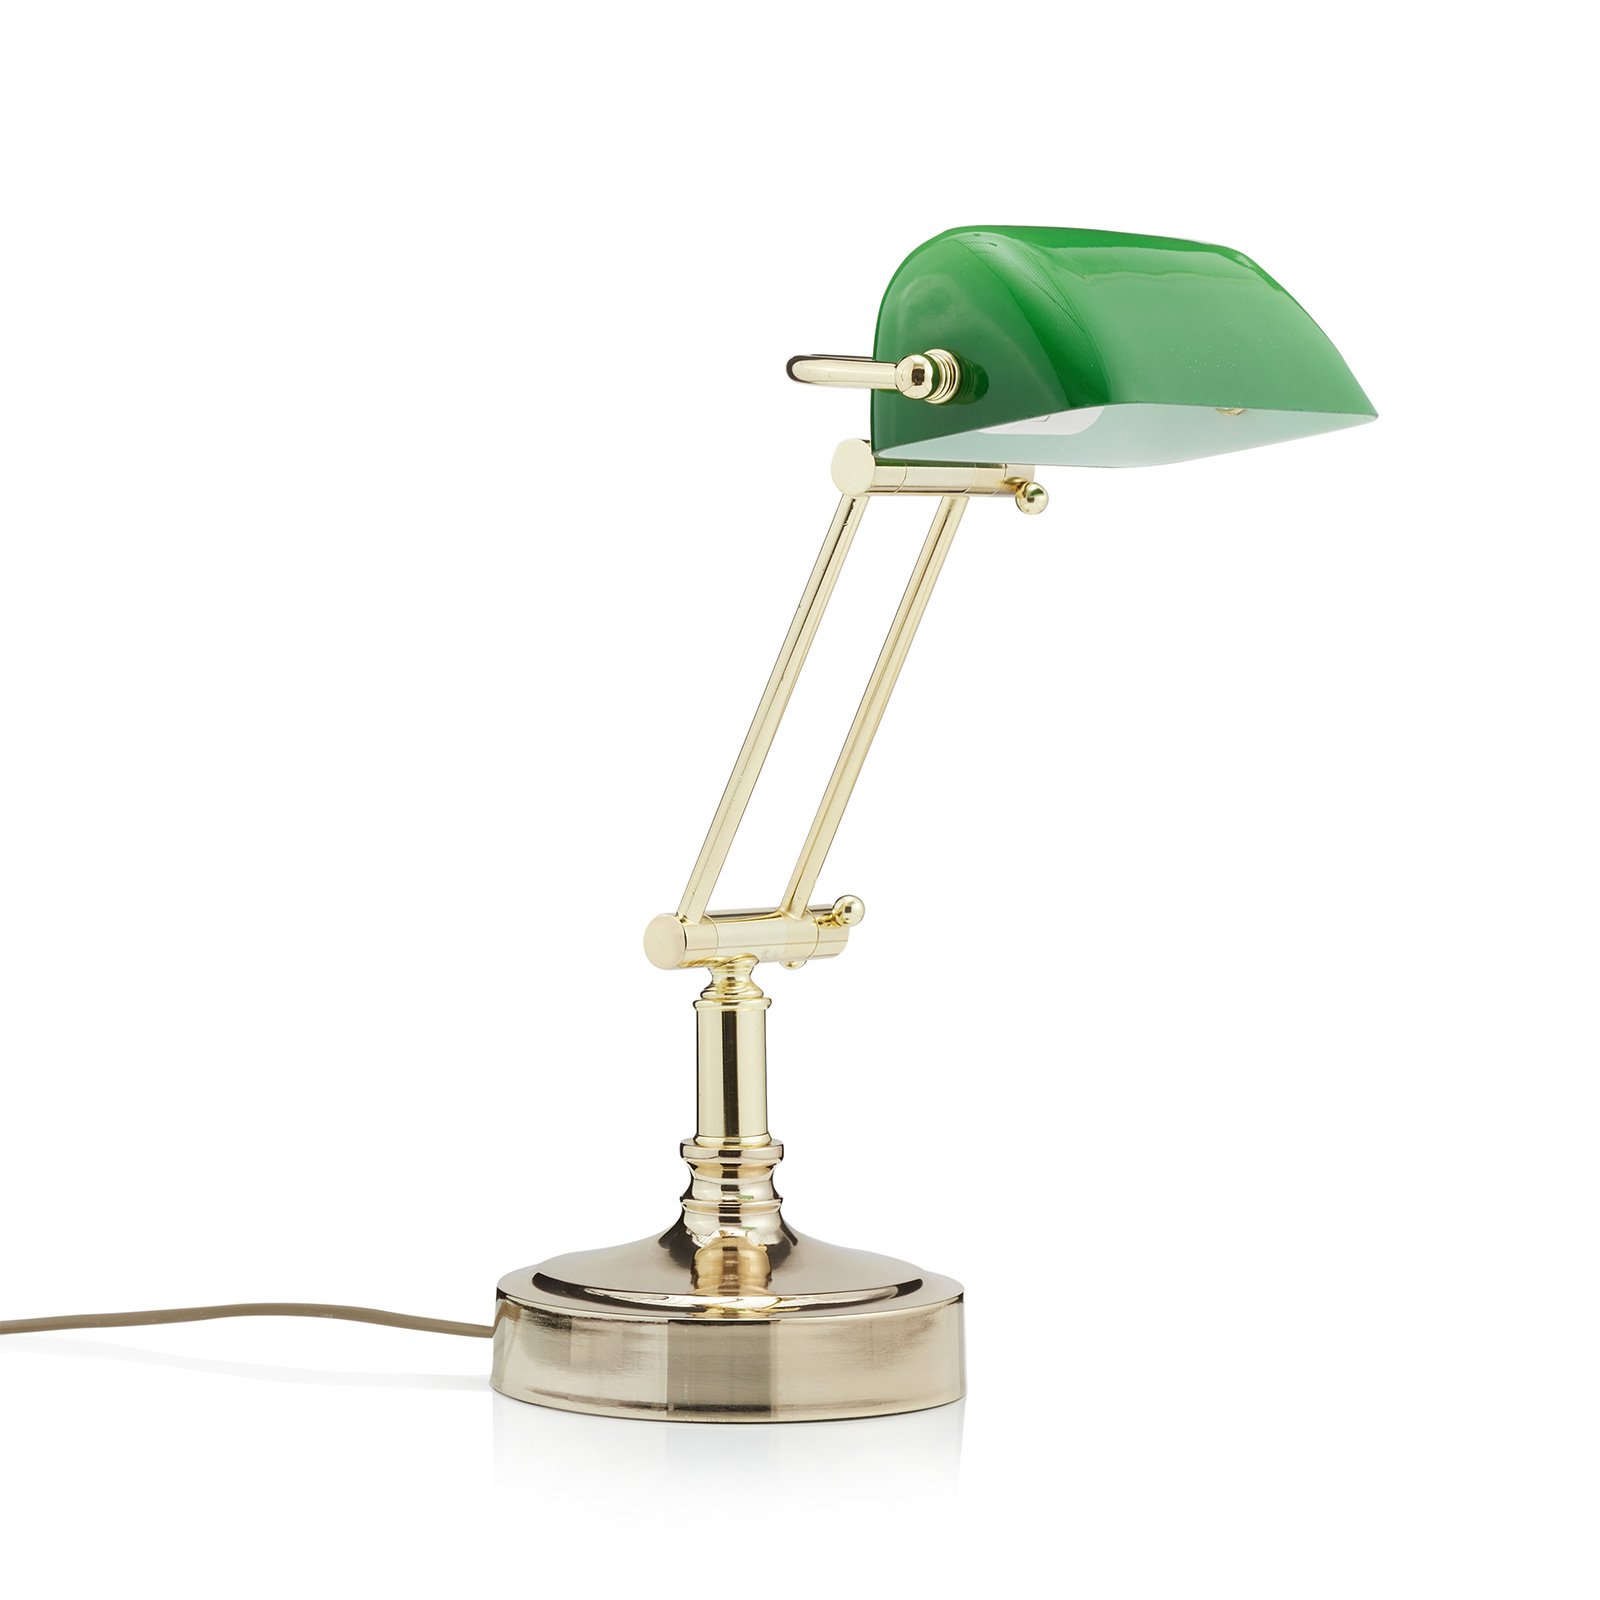 Bankárska lampa Steve so zeleným skleneným tienidlom